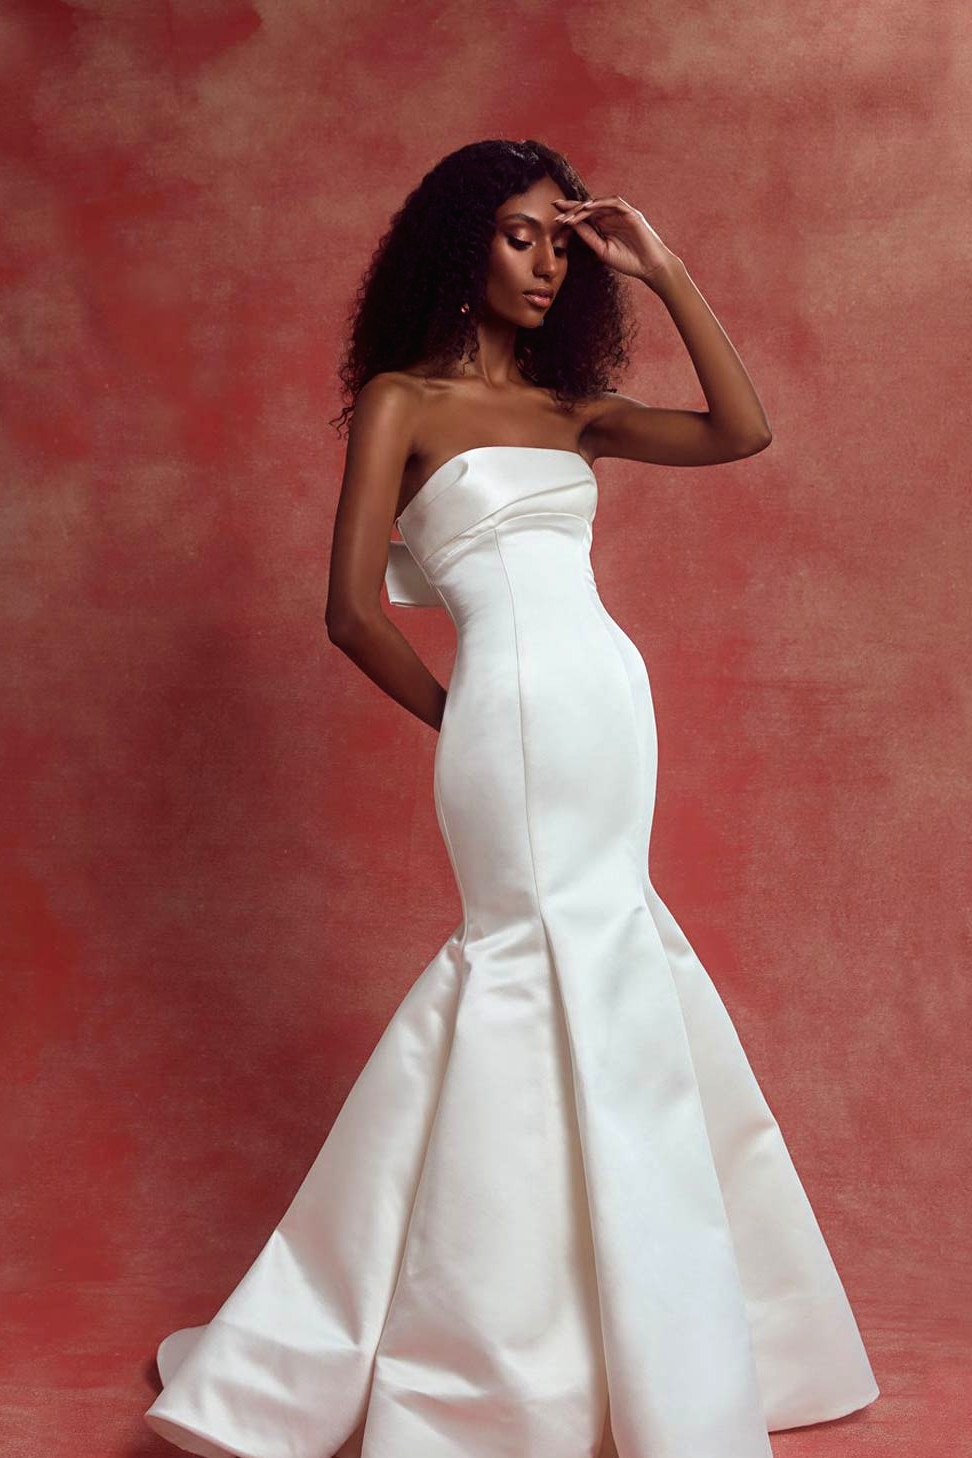 Carson bridal gown wedding dress model long train dress